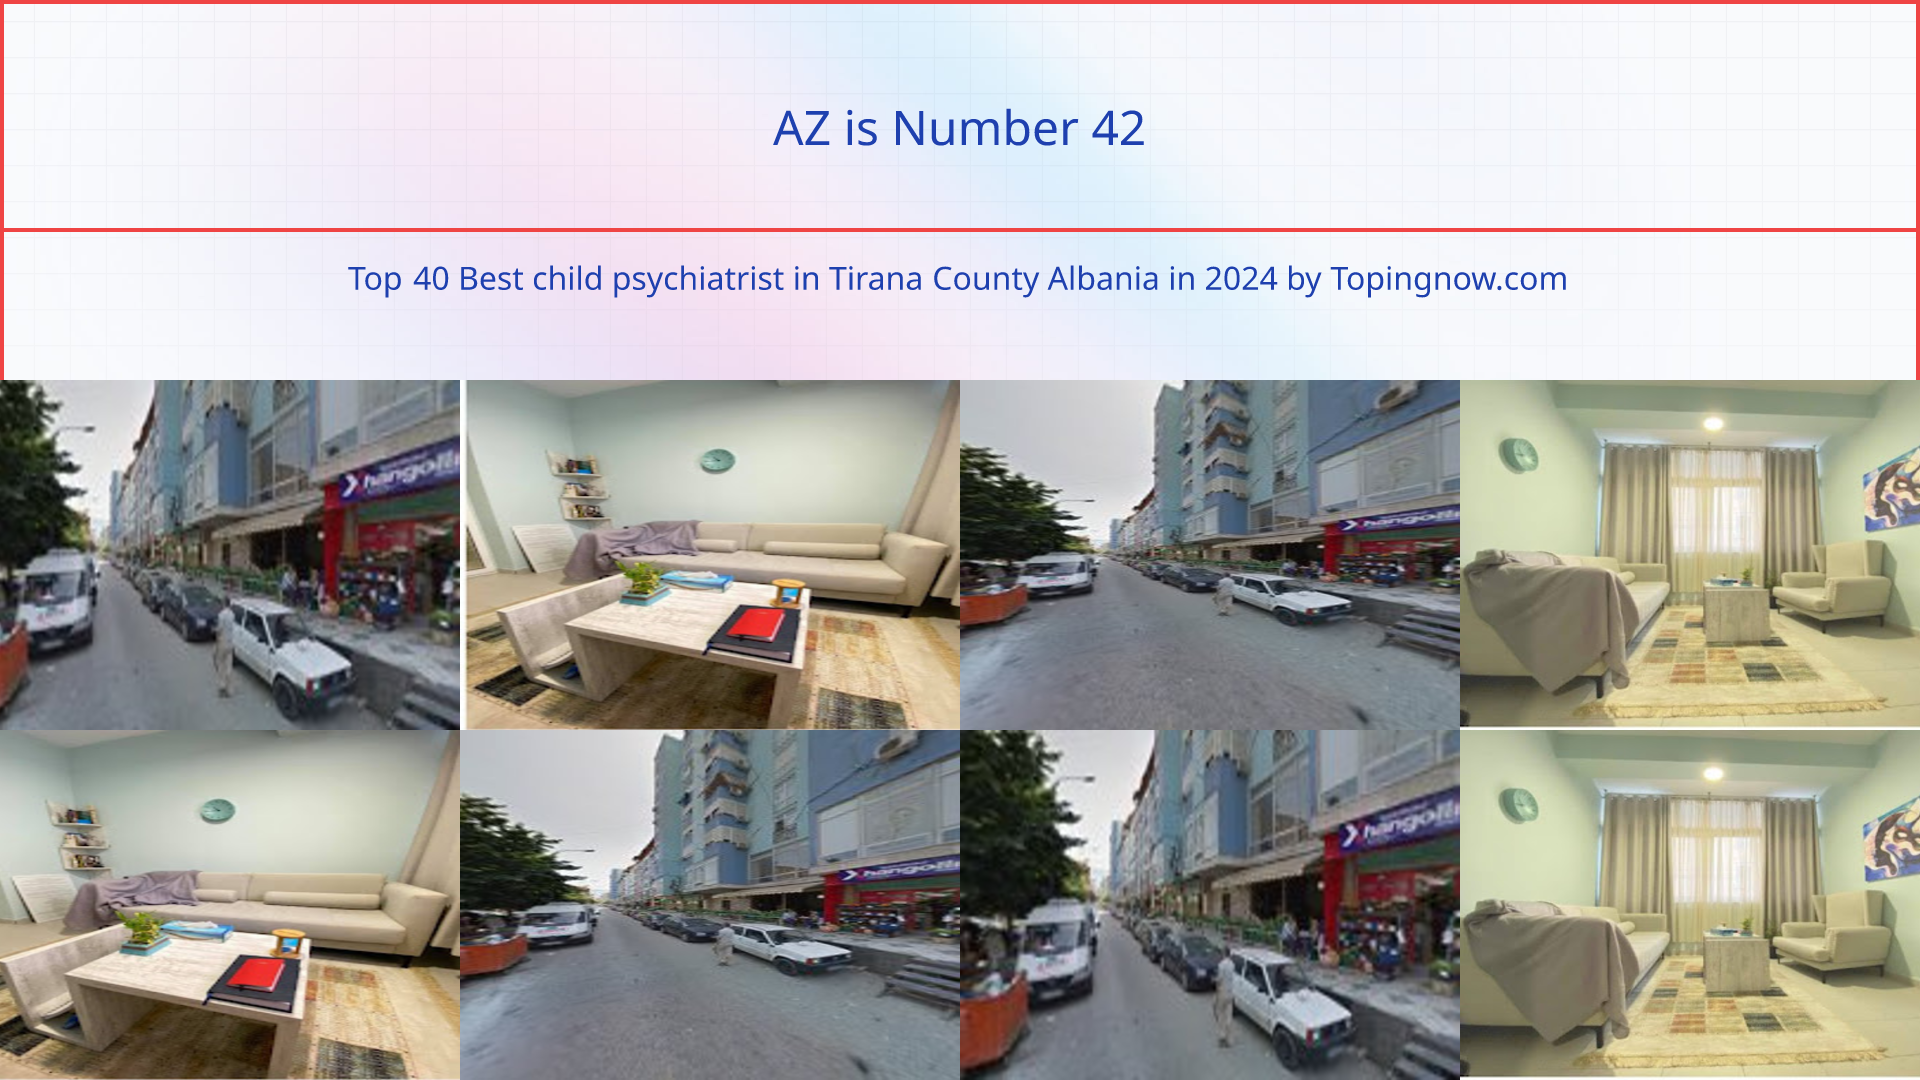 AZ: Top 40 Best child psychiatrist in Tirana County Albania in 2024